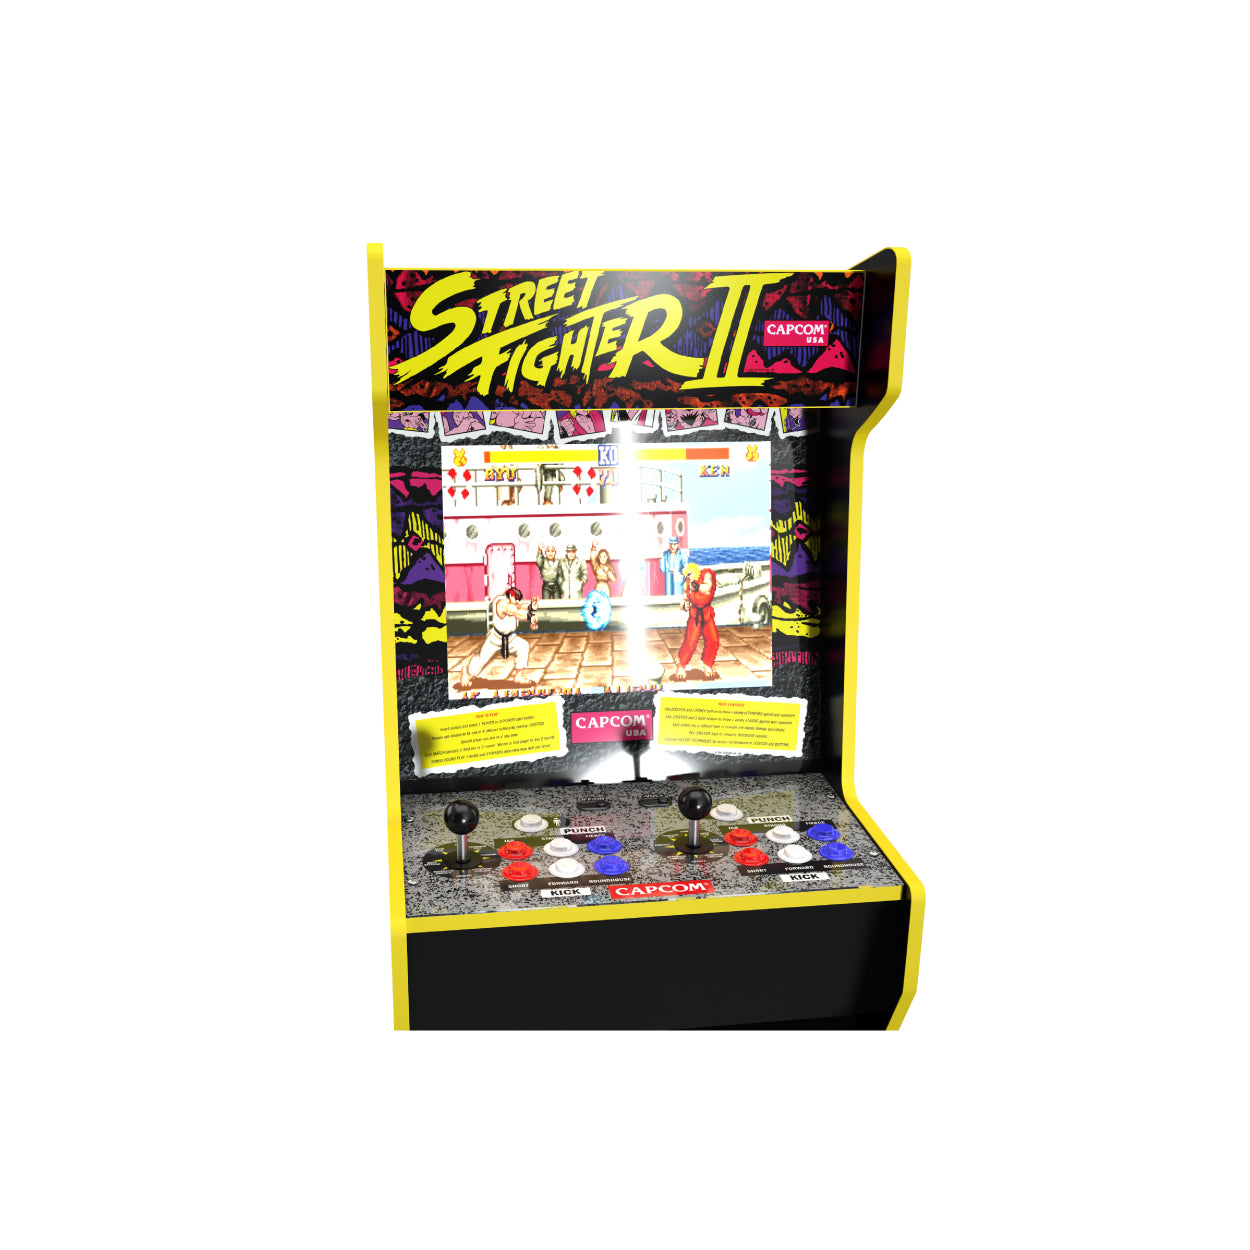 Street Fighter Capcom 12-in-1 Arcade Machine